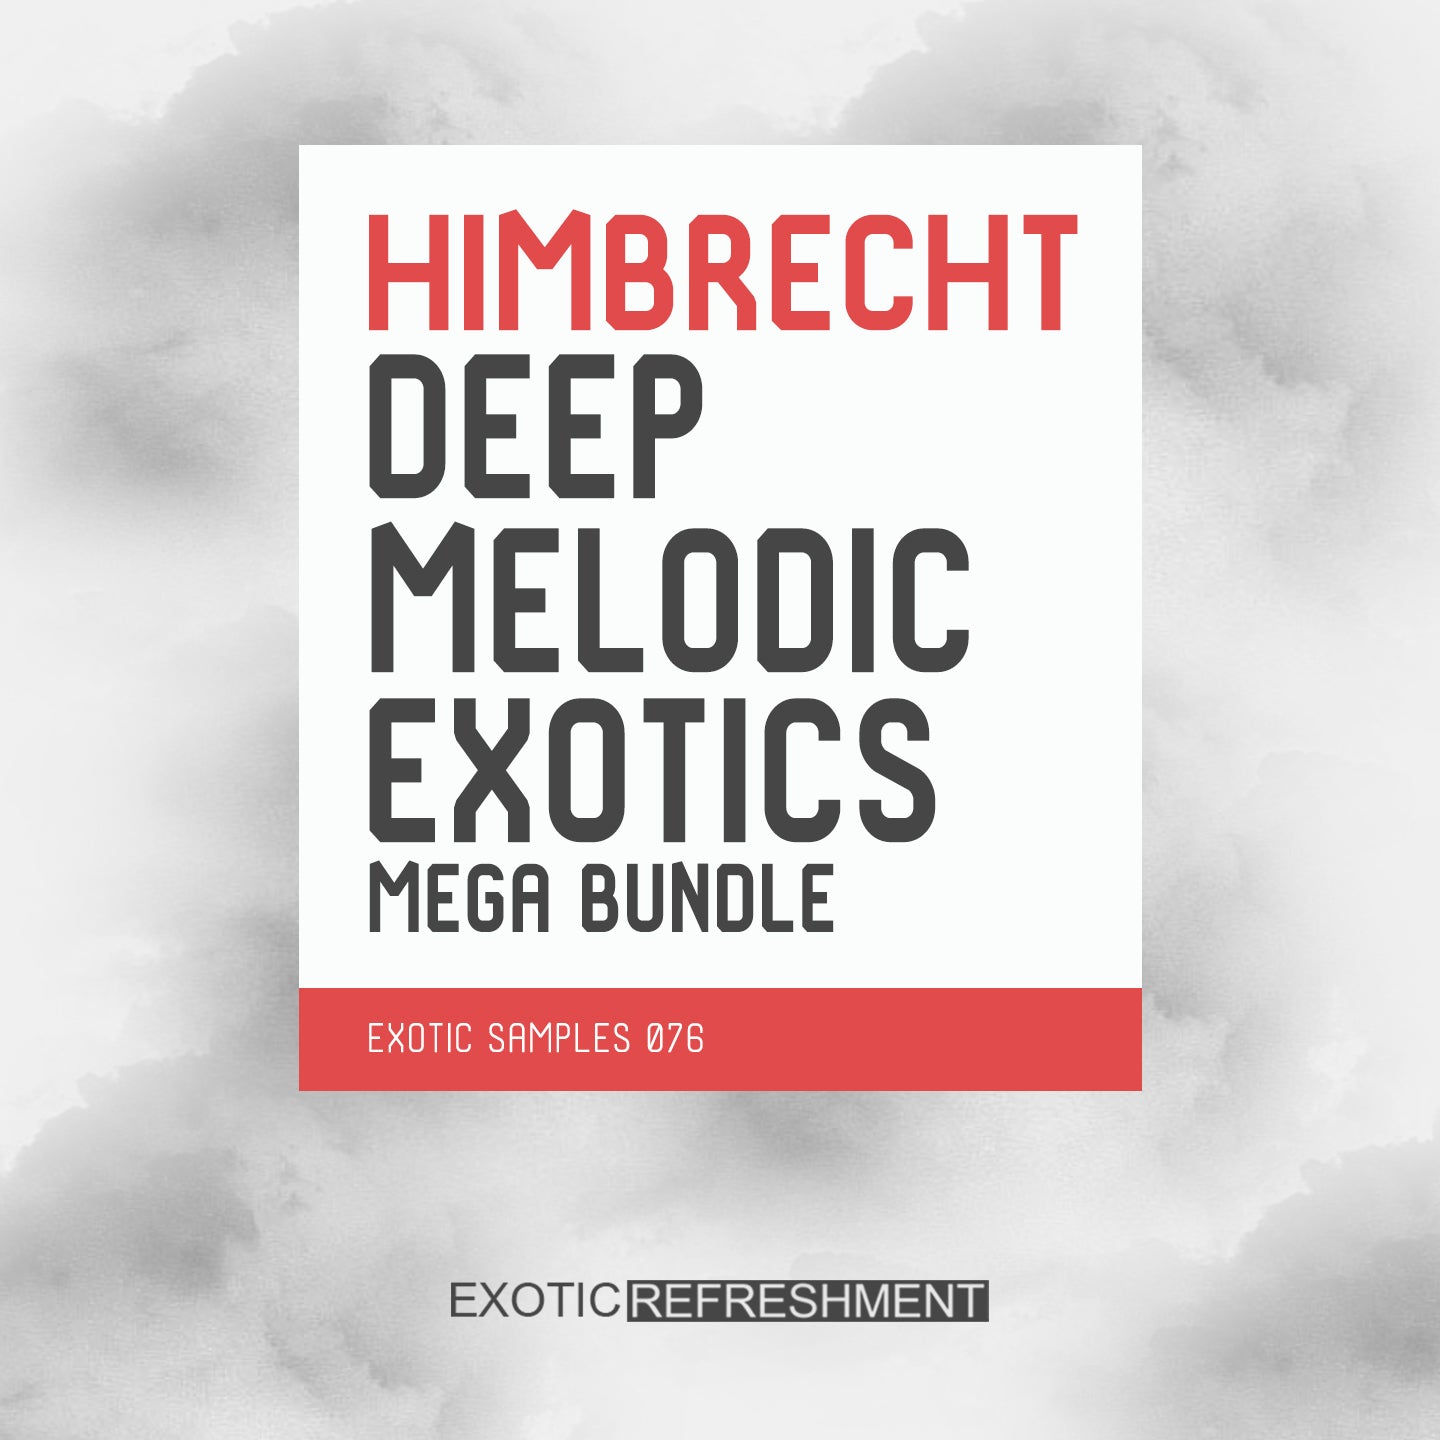 Himbrecht Deep Melodic Exotics Mega Bundle - Sample Pack